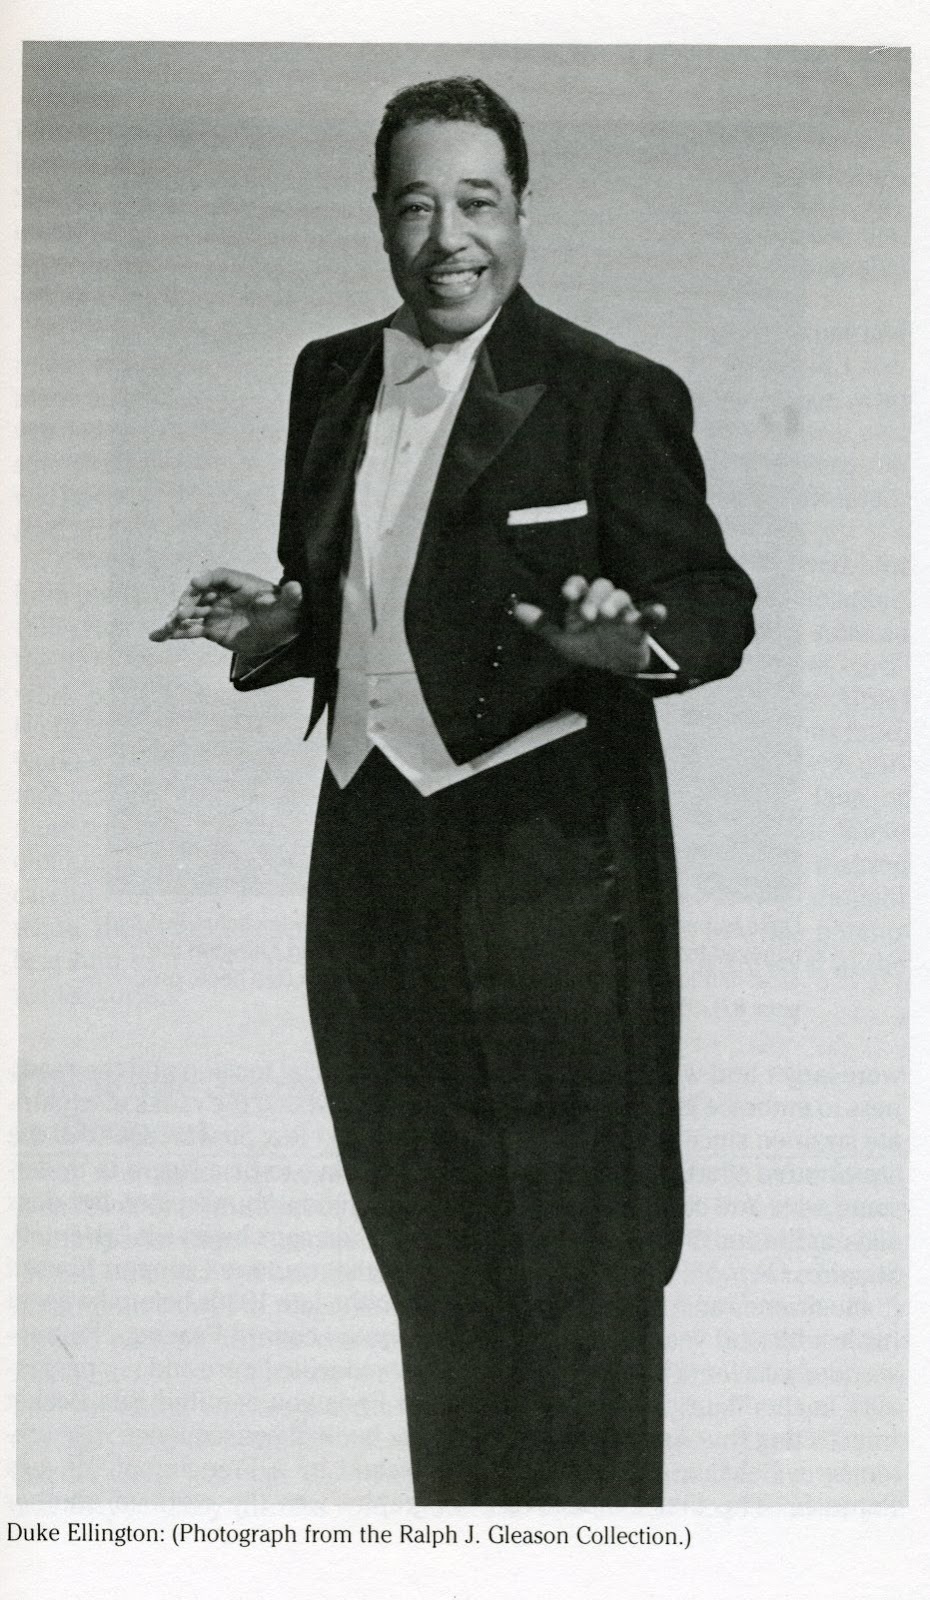 JazzProfiles: Duke Ellington: Our Greatest Composer - Grover Sales